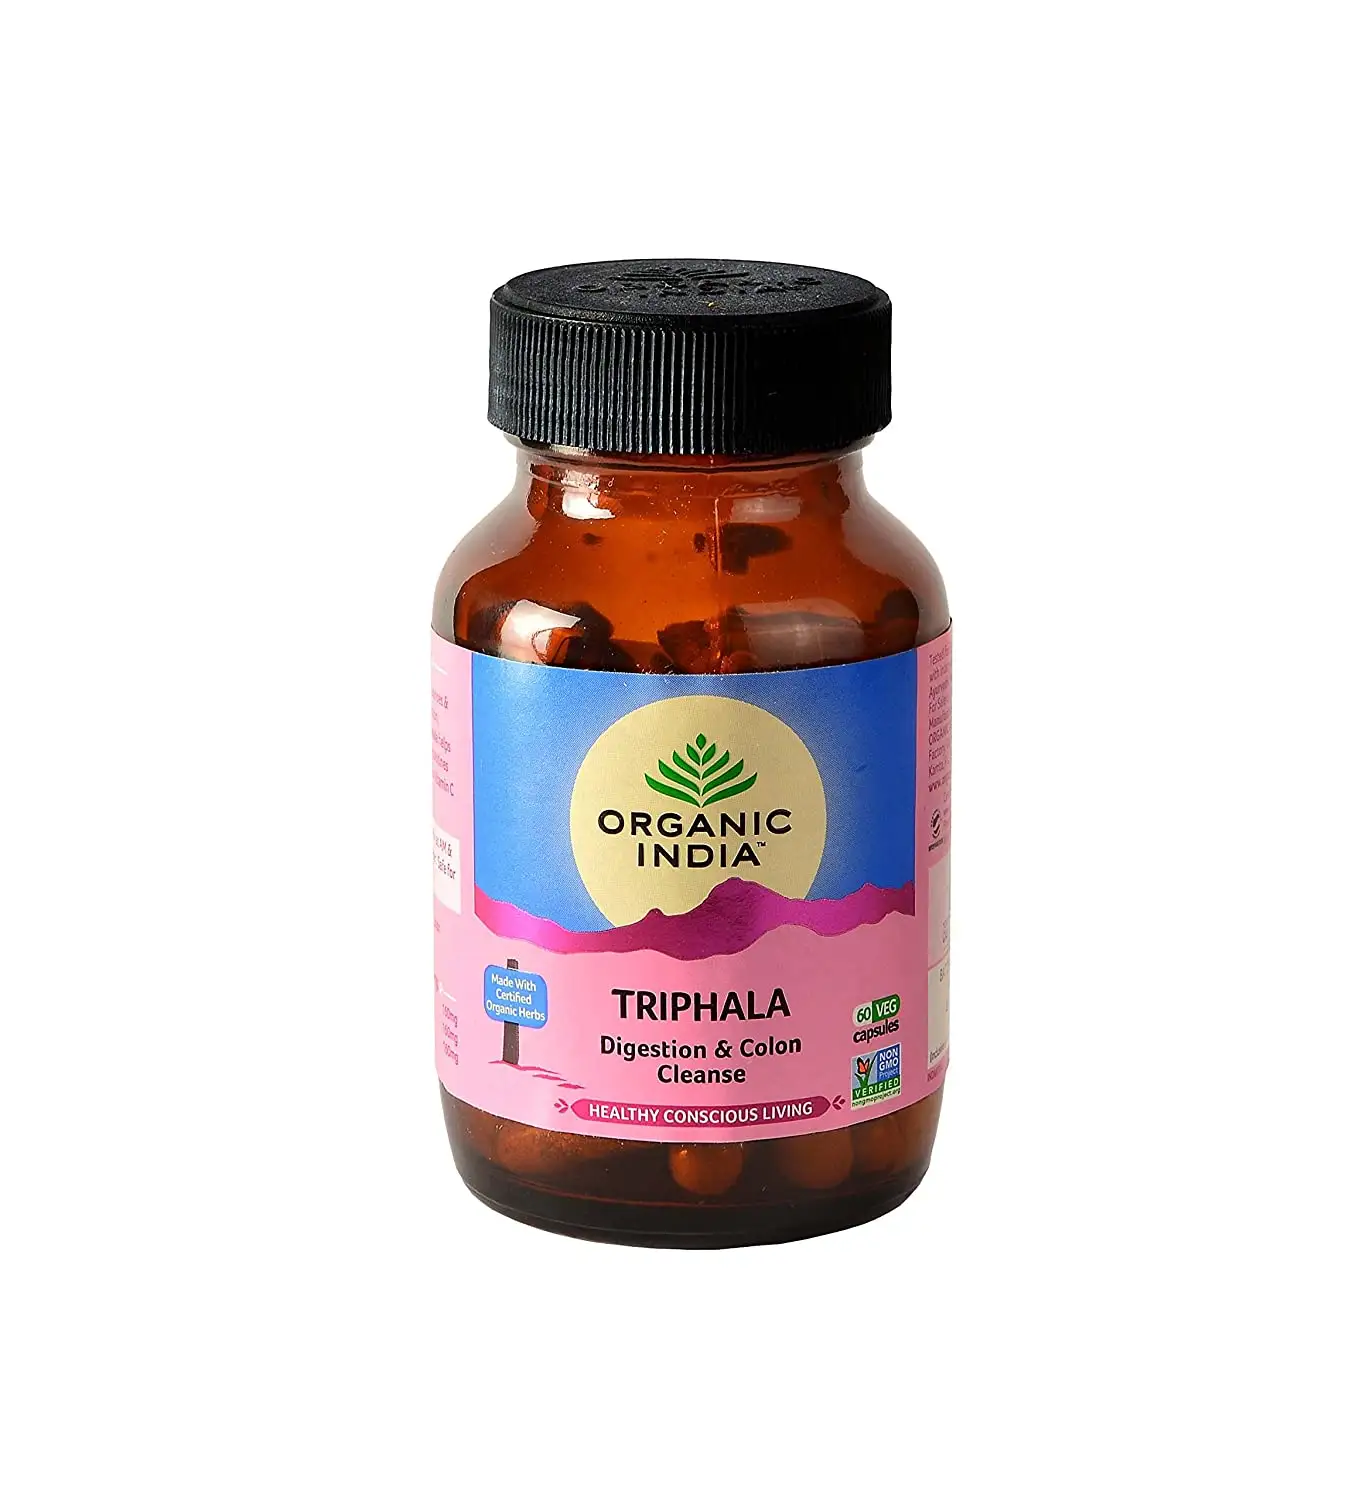 Triphala Kapseln/Reinigungen & Stützen/Kräuter ergänzung Organic India Capsules Powder